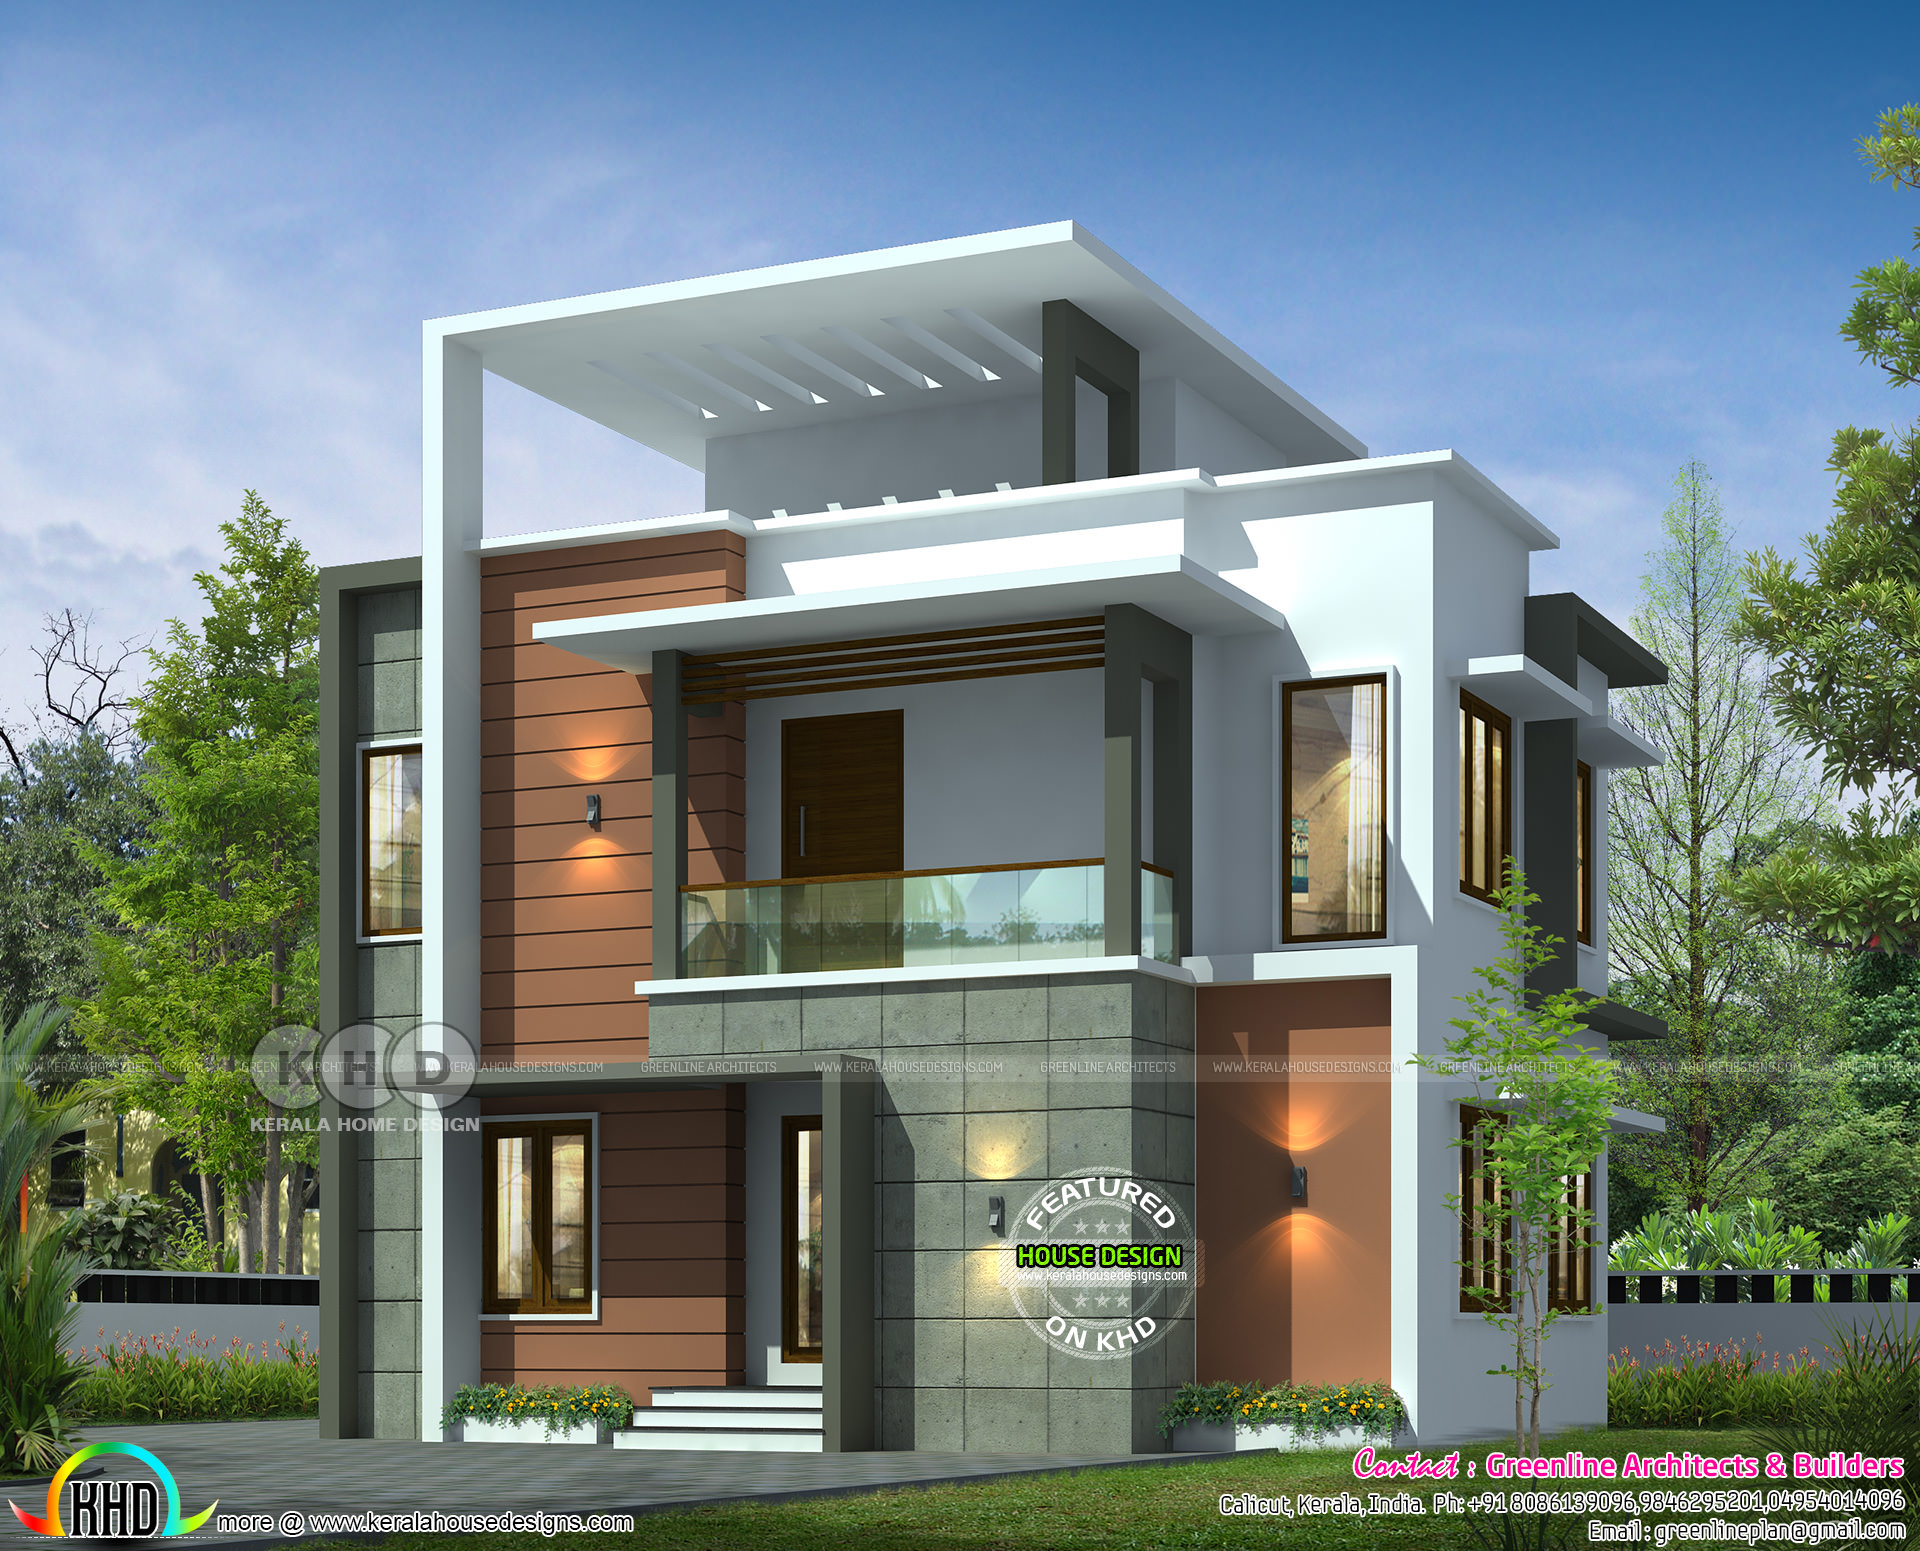 1790 Square Feet 3 Bedroom Contemporary House Plan Kerala